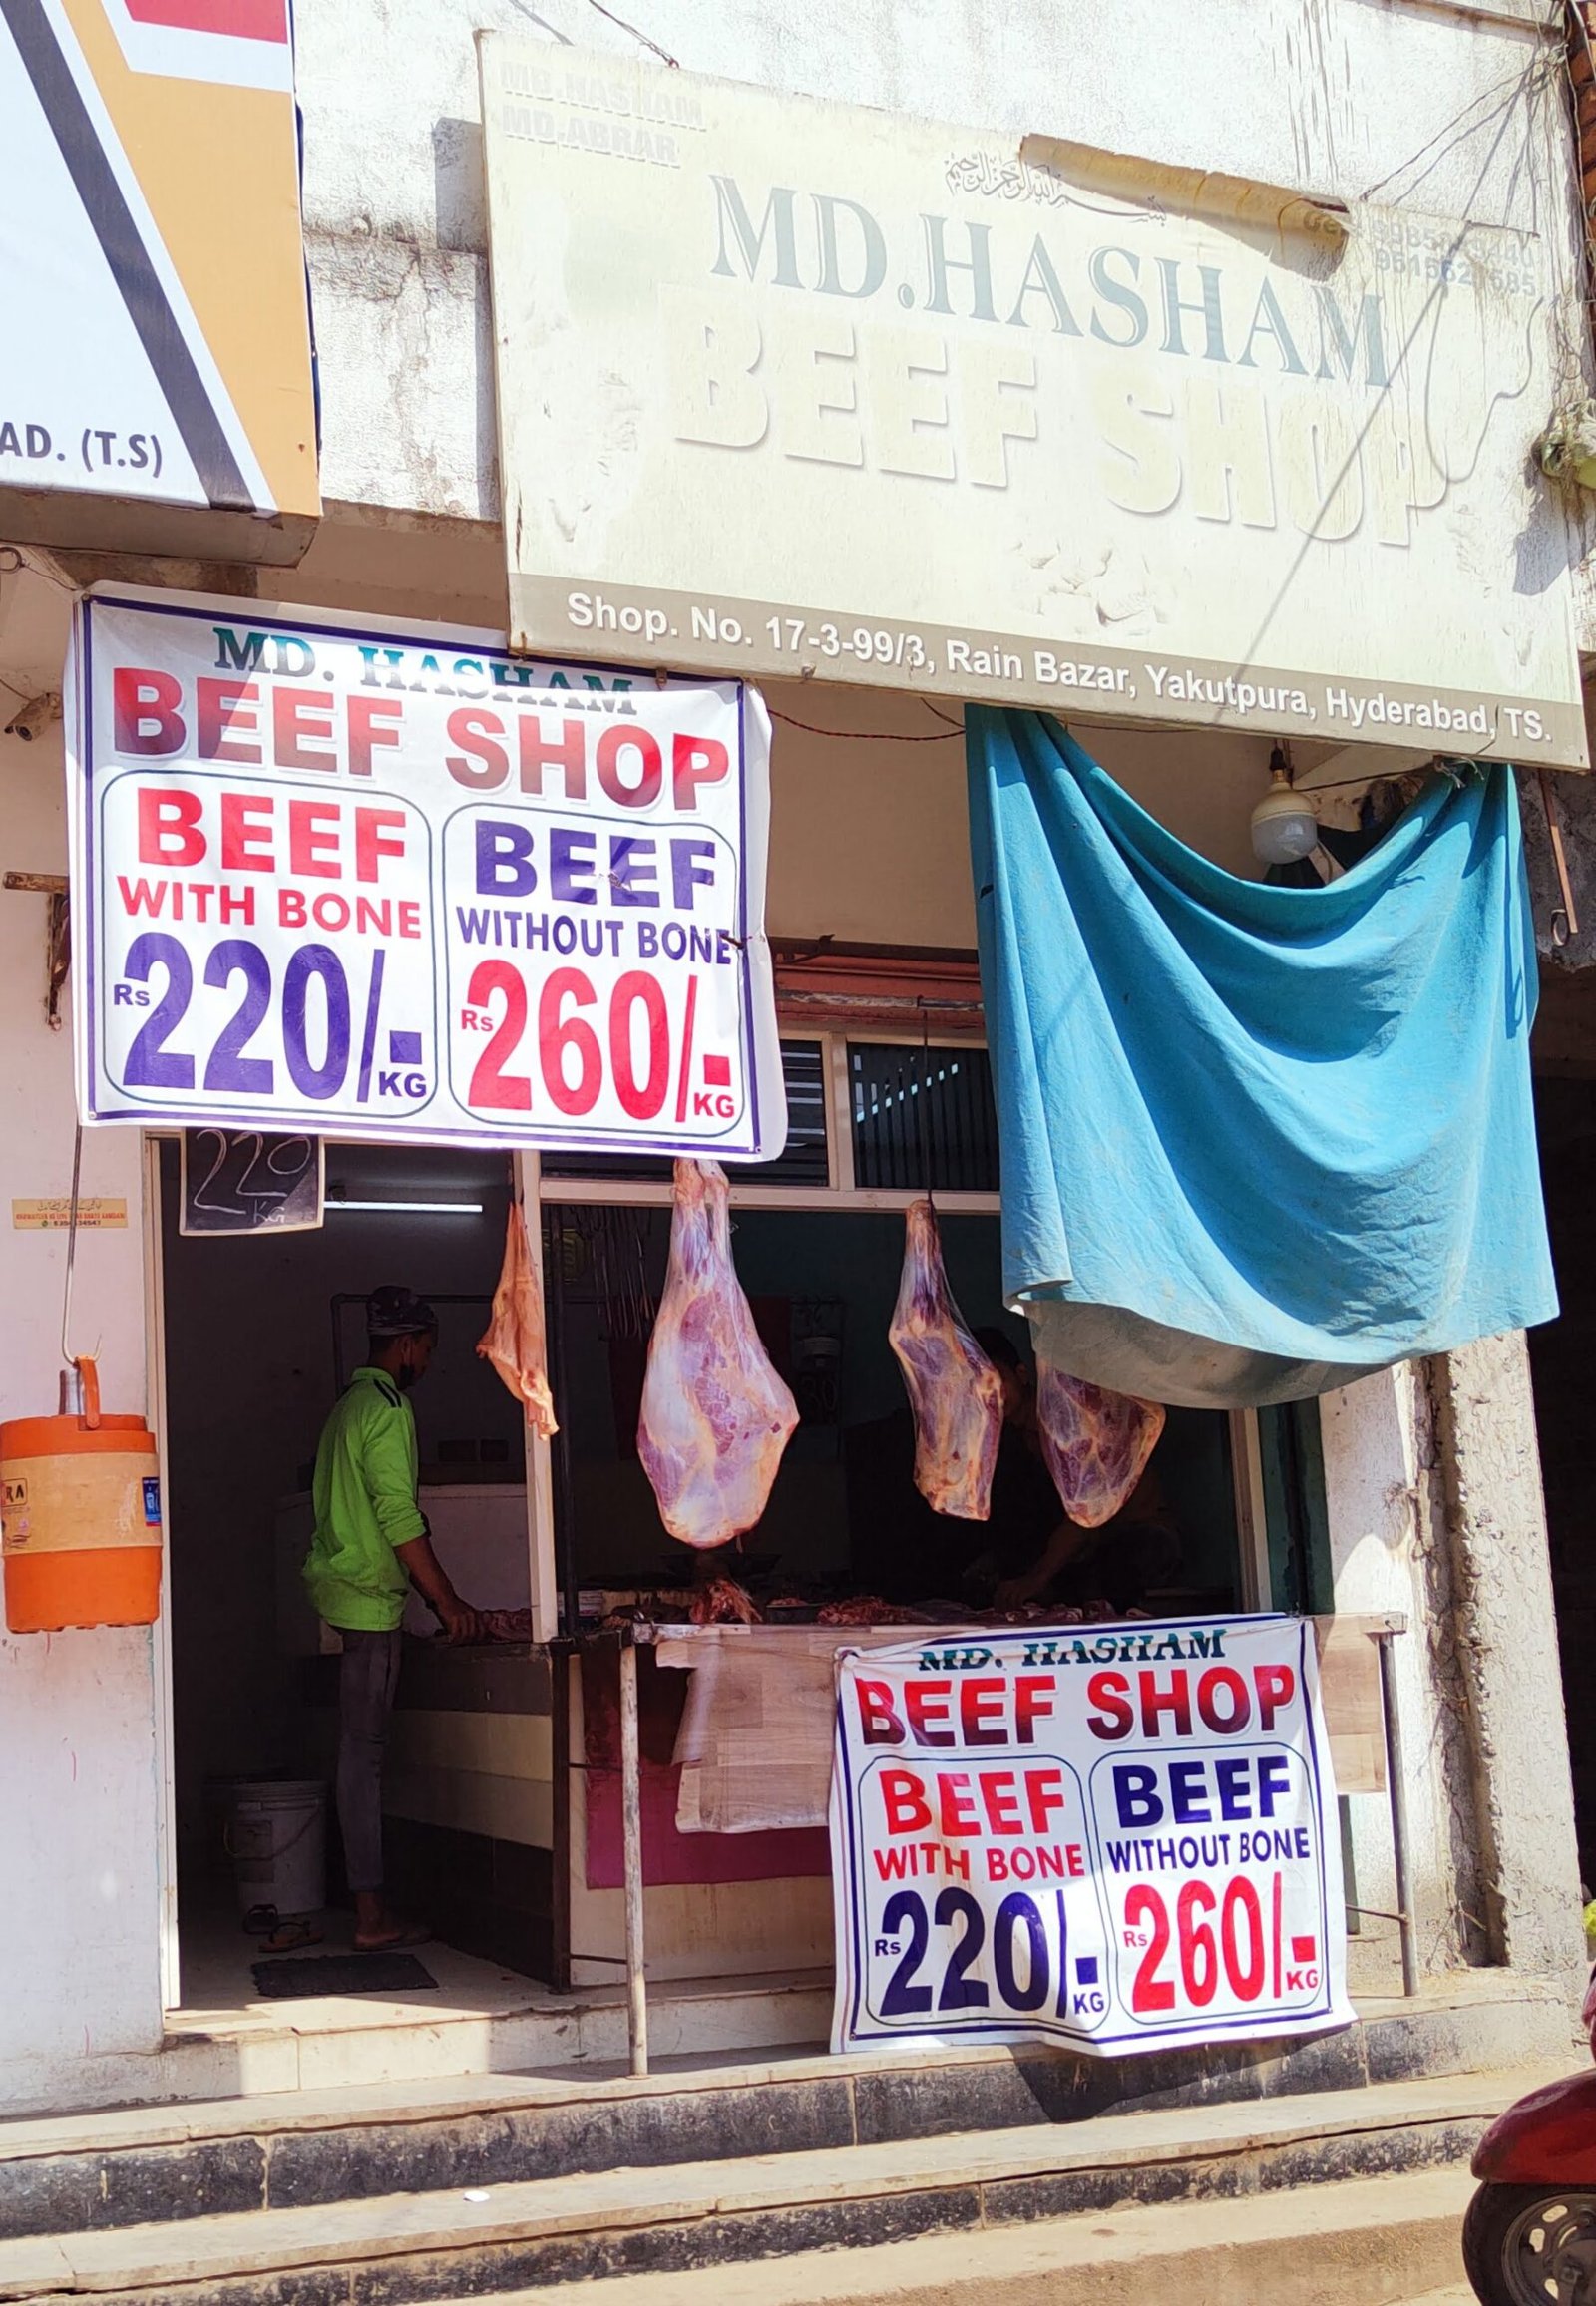 MD.Hasham Beef Shop in Yakutpura